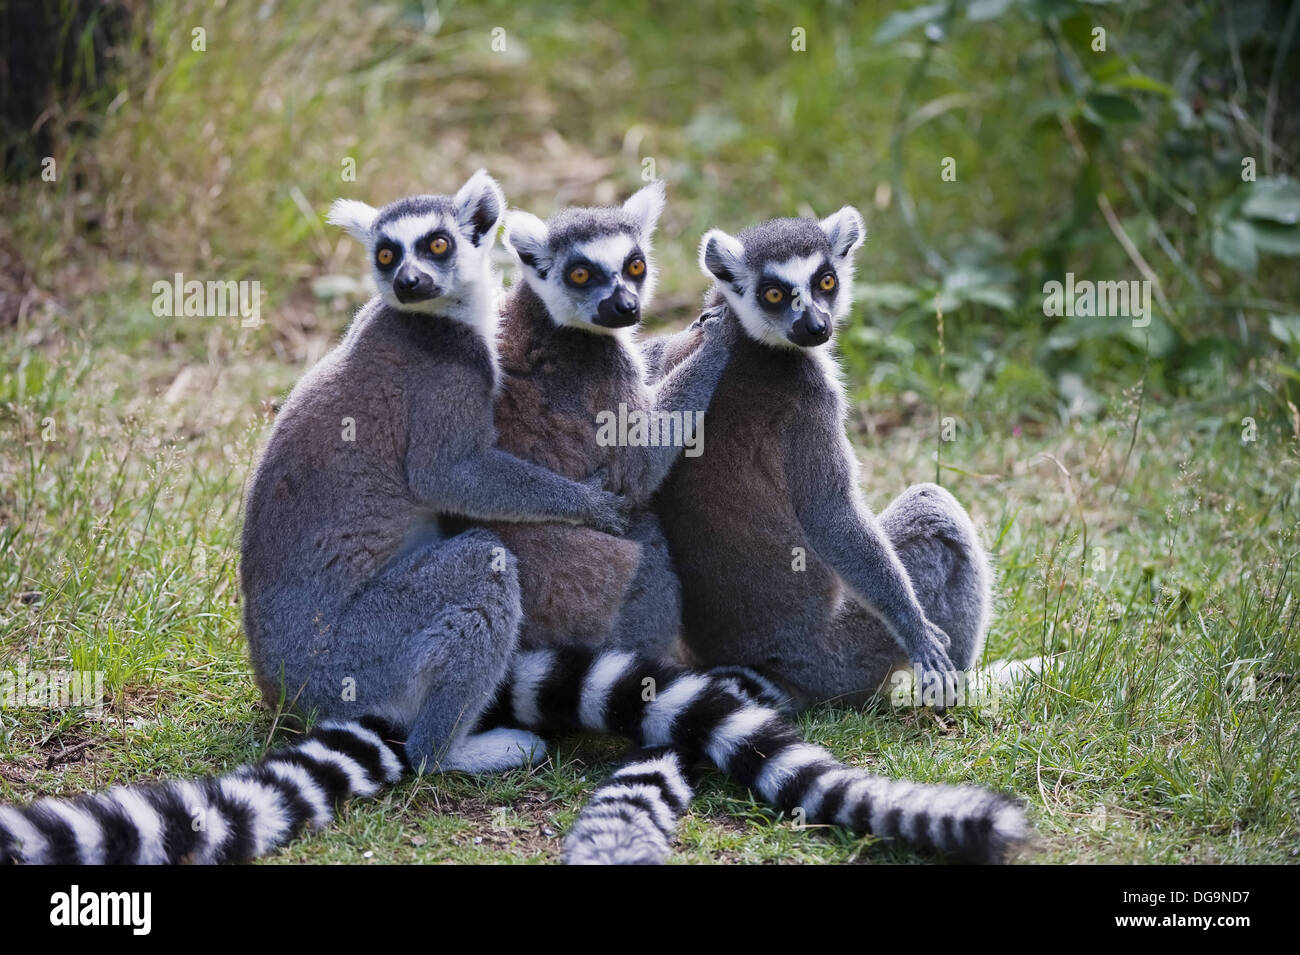 Ring-tailed Lemur Lemur catta, Near Threatened IUCN 2009, Endemic to Madagascar, Stock Photo